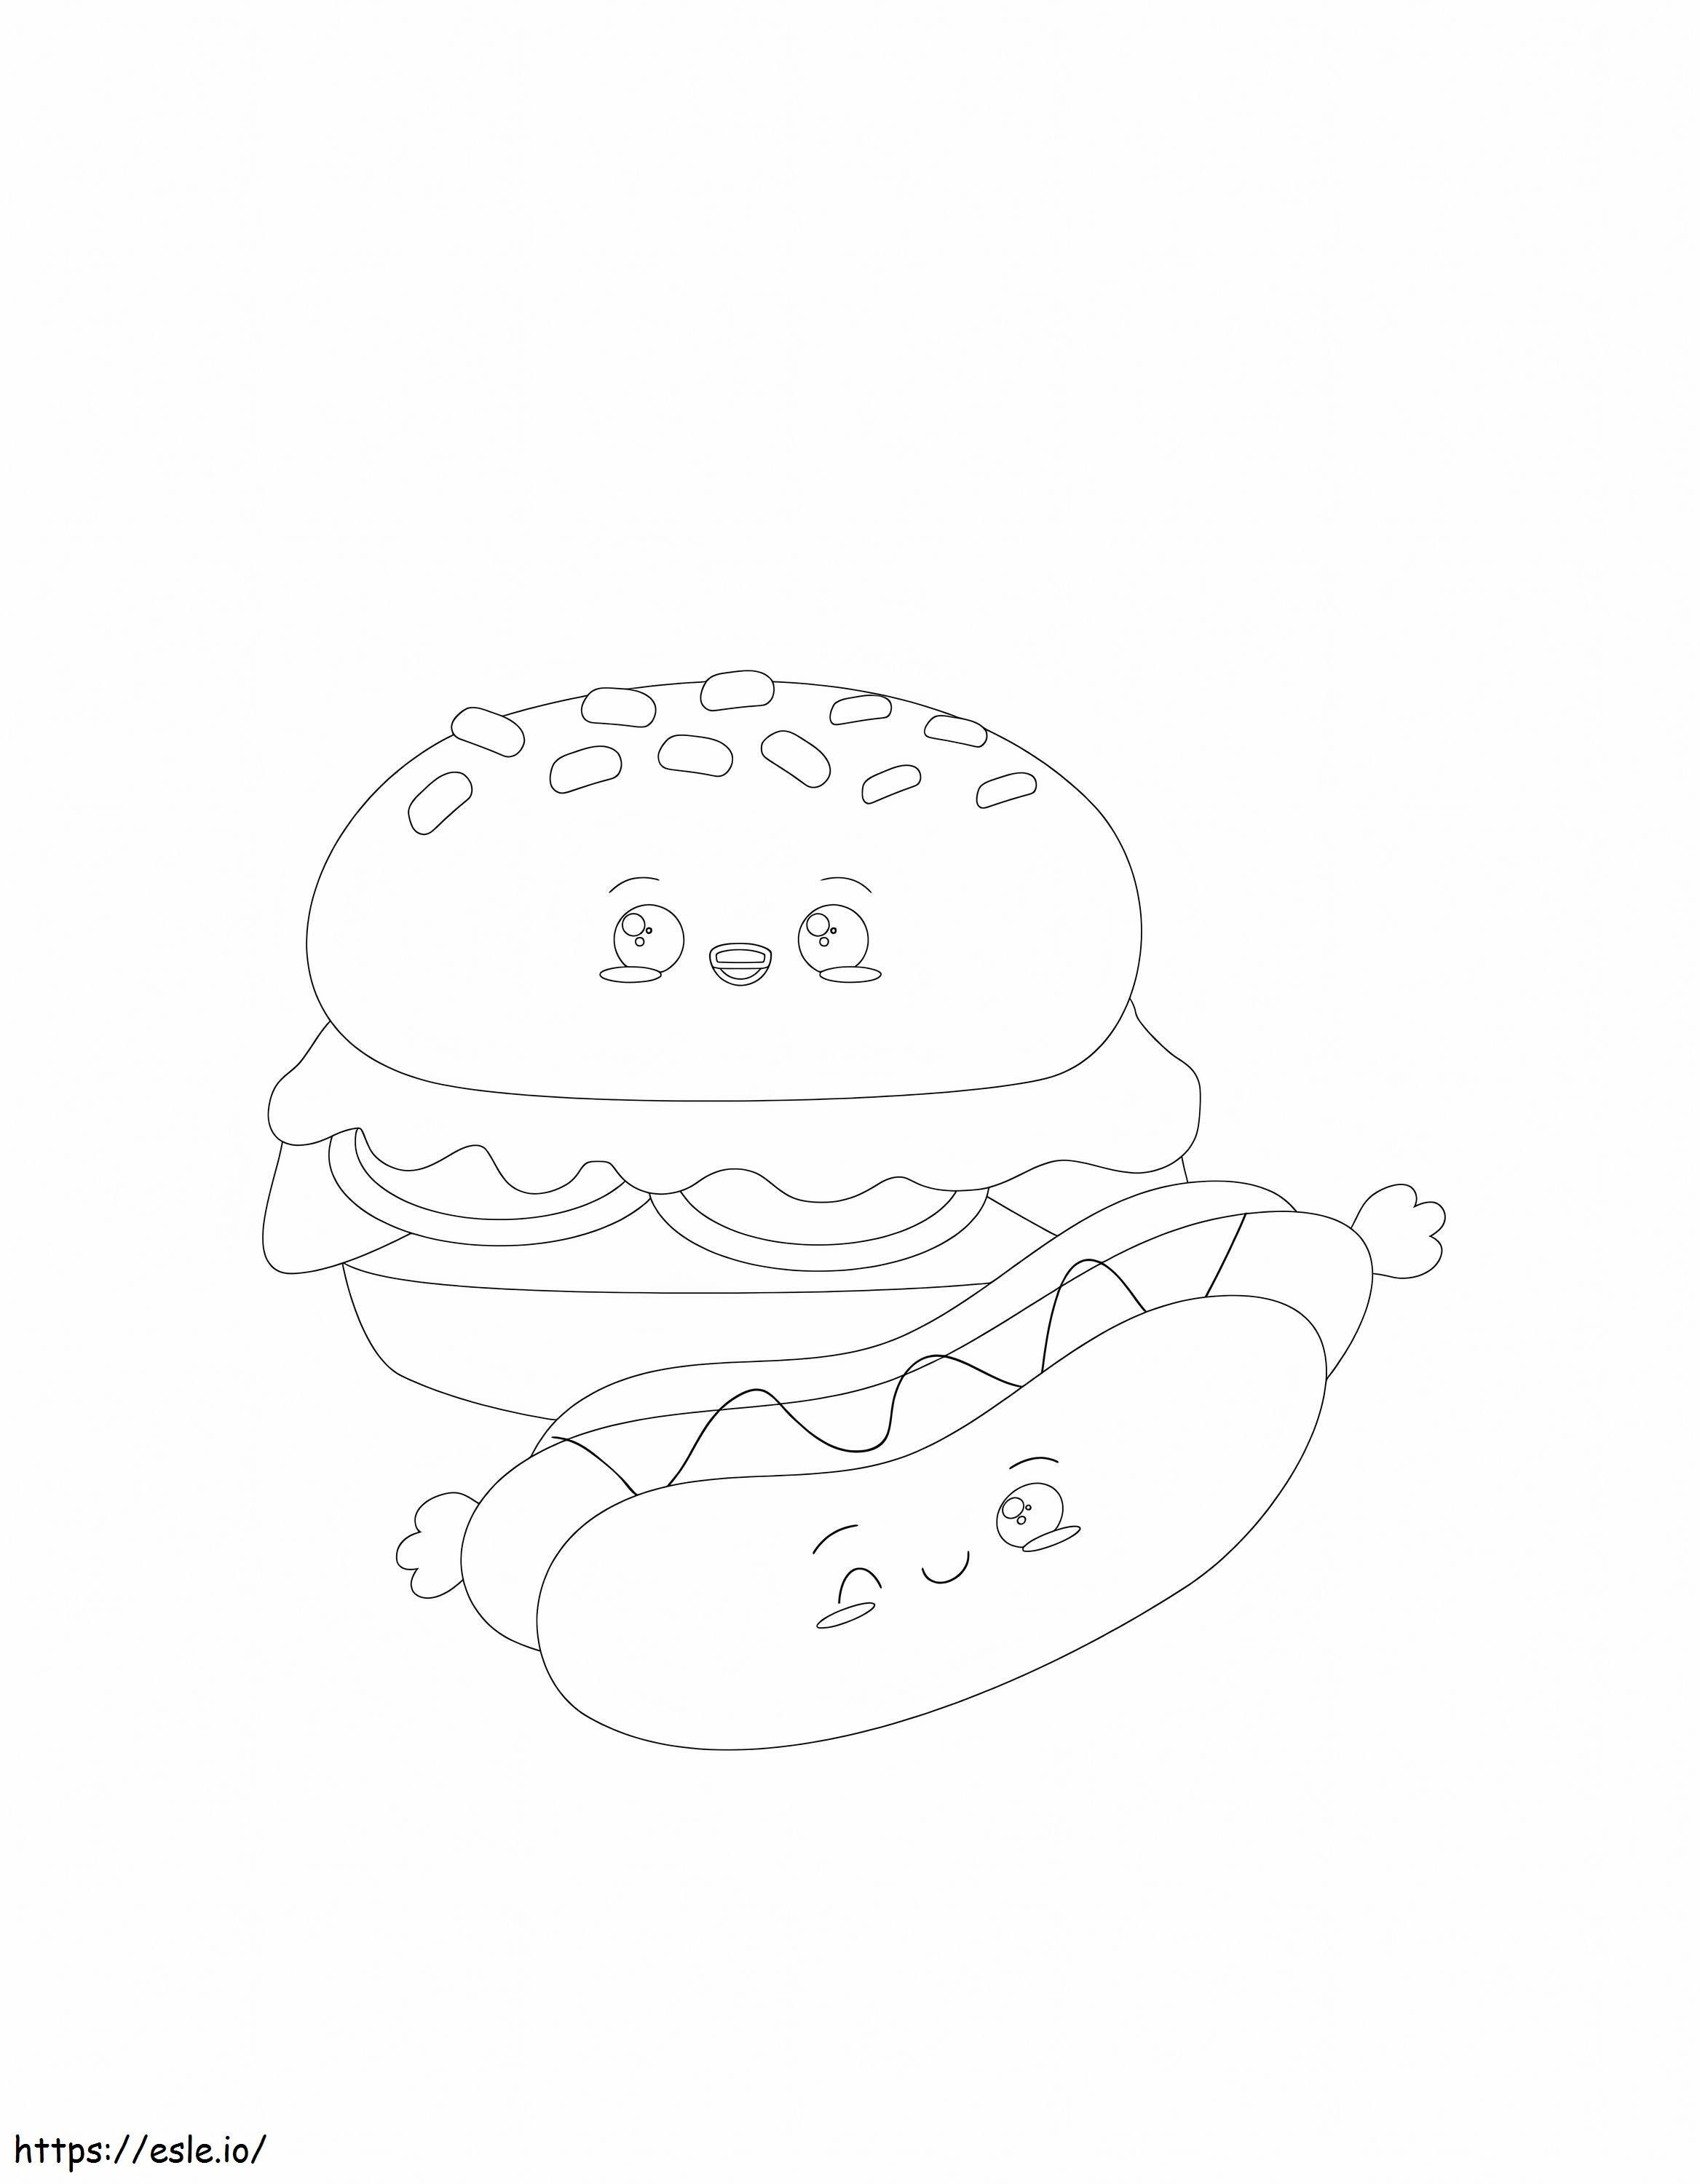 Chibi-Burger und Chibi-Hotdog ausmalbilder